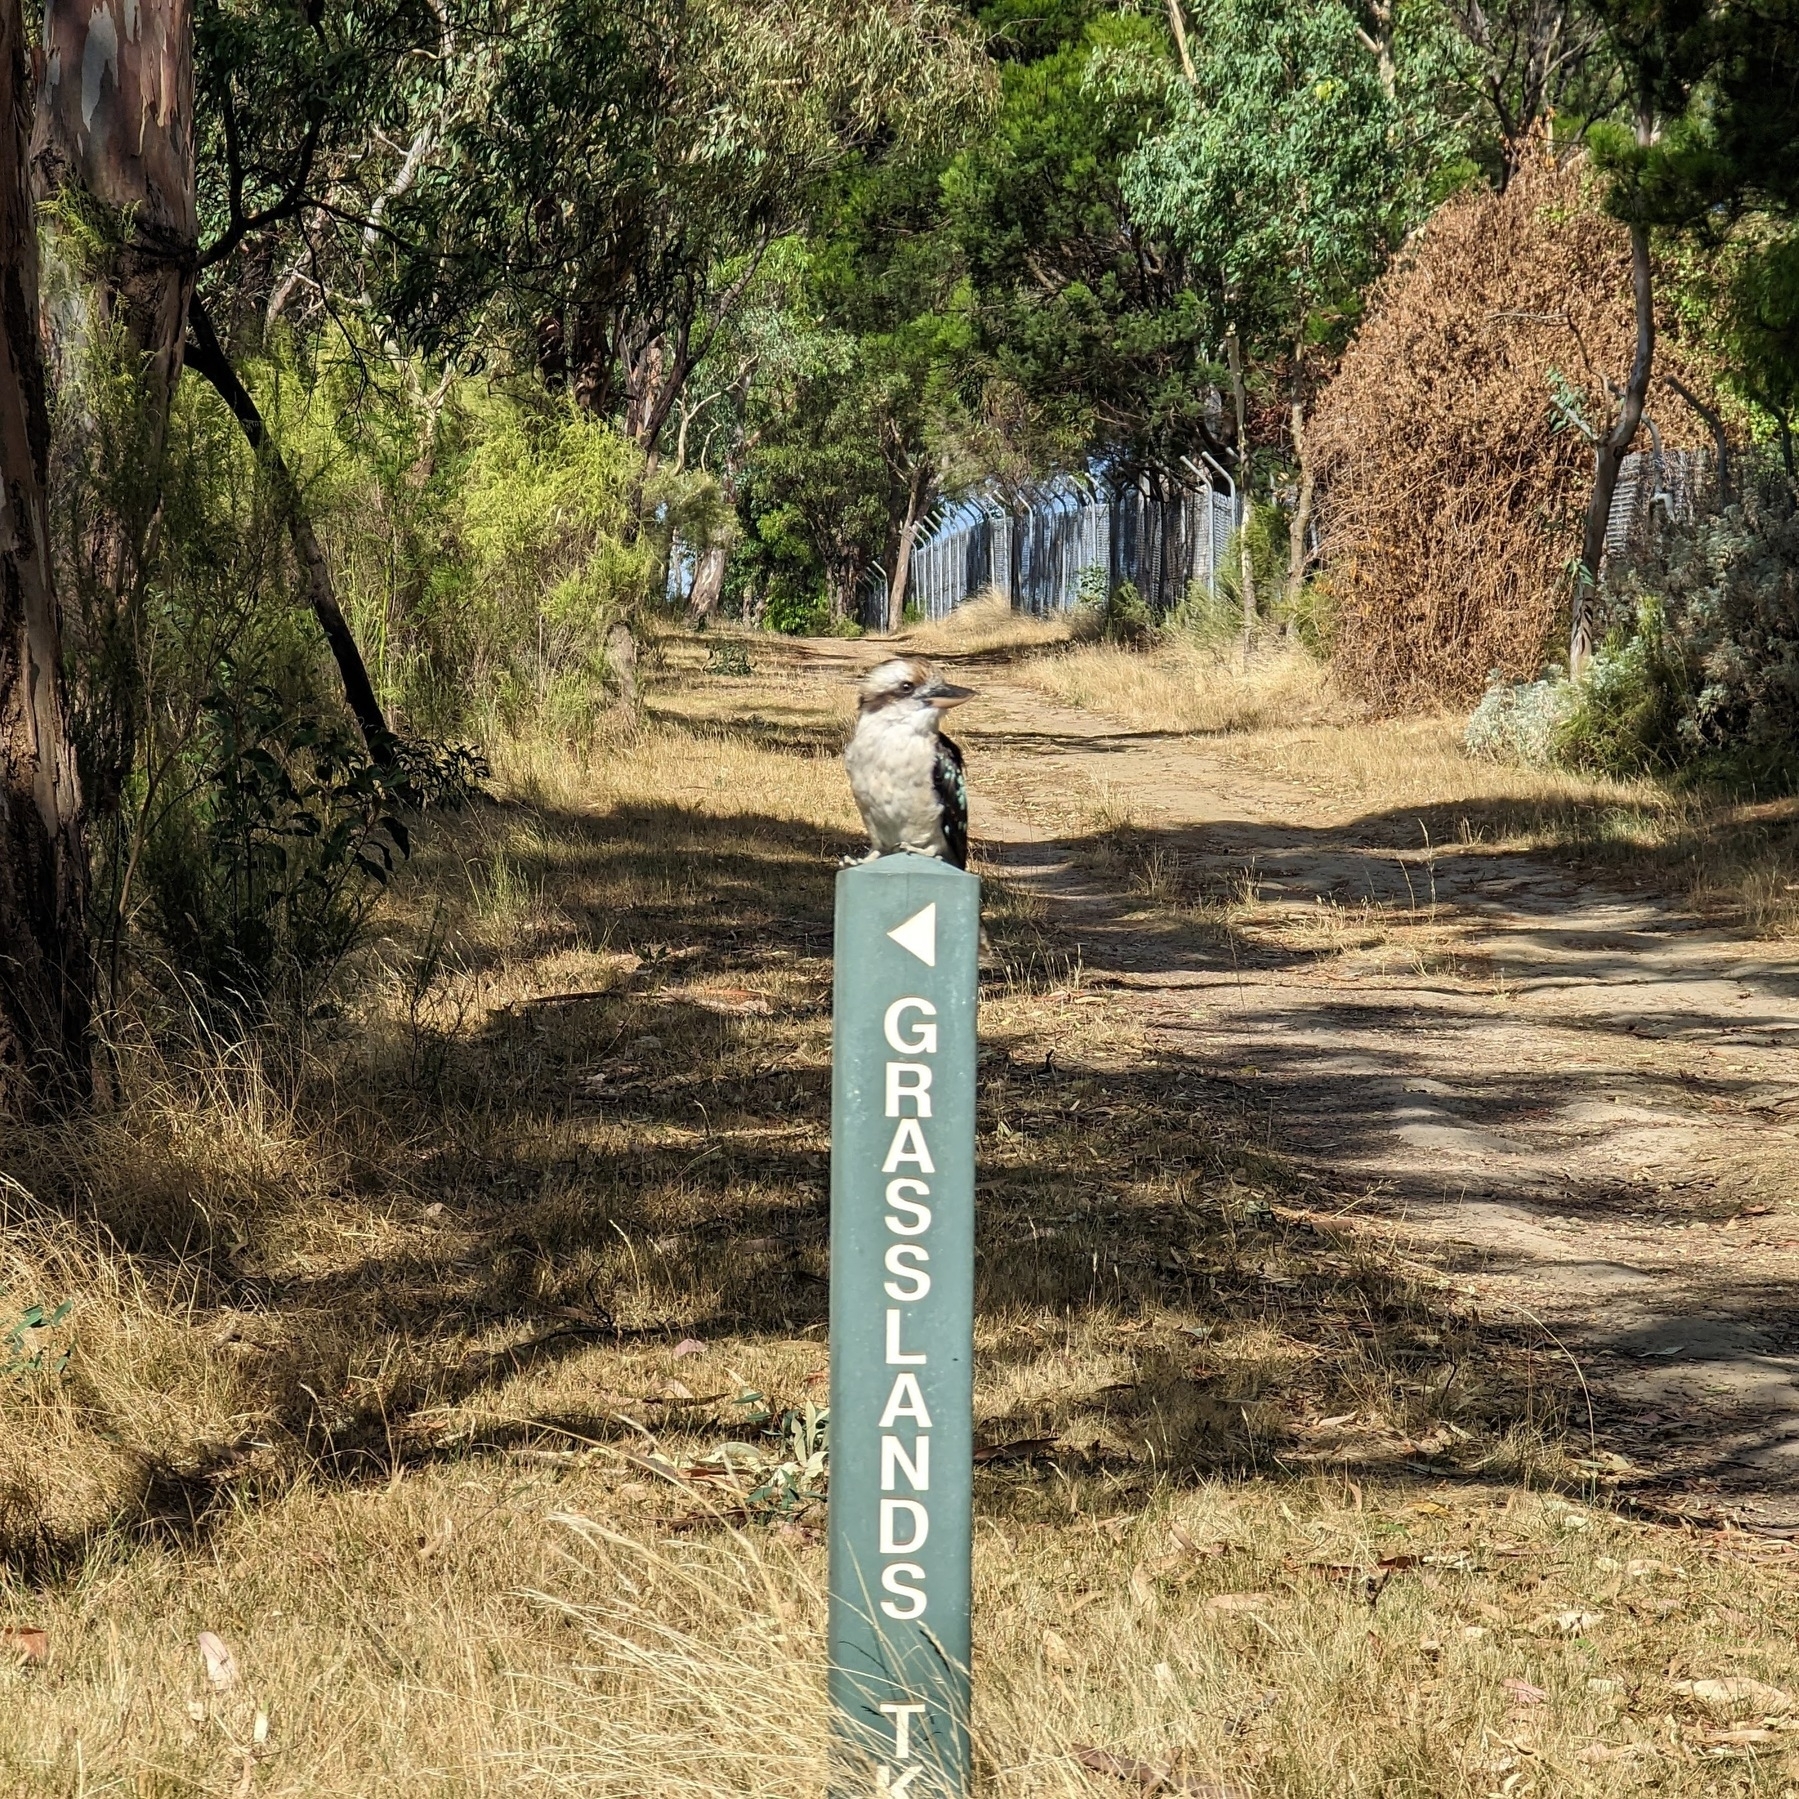 Kookaburra perched on a signpost saying Grassland Tk near a forest.